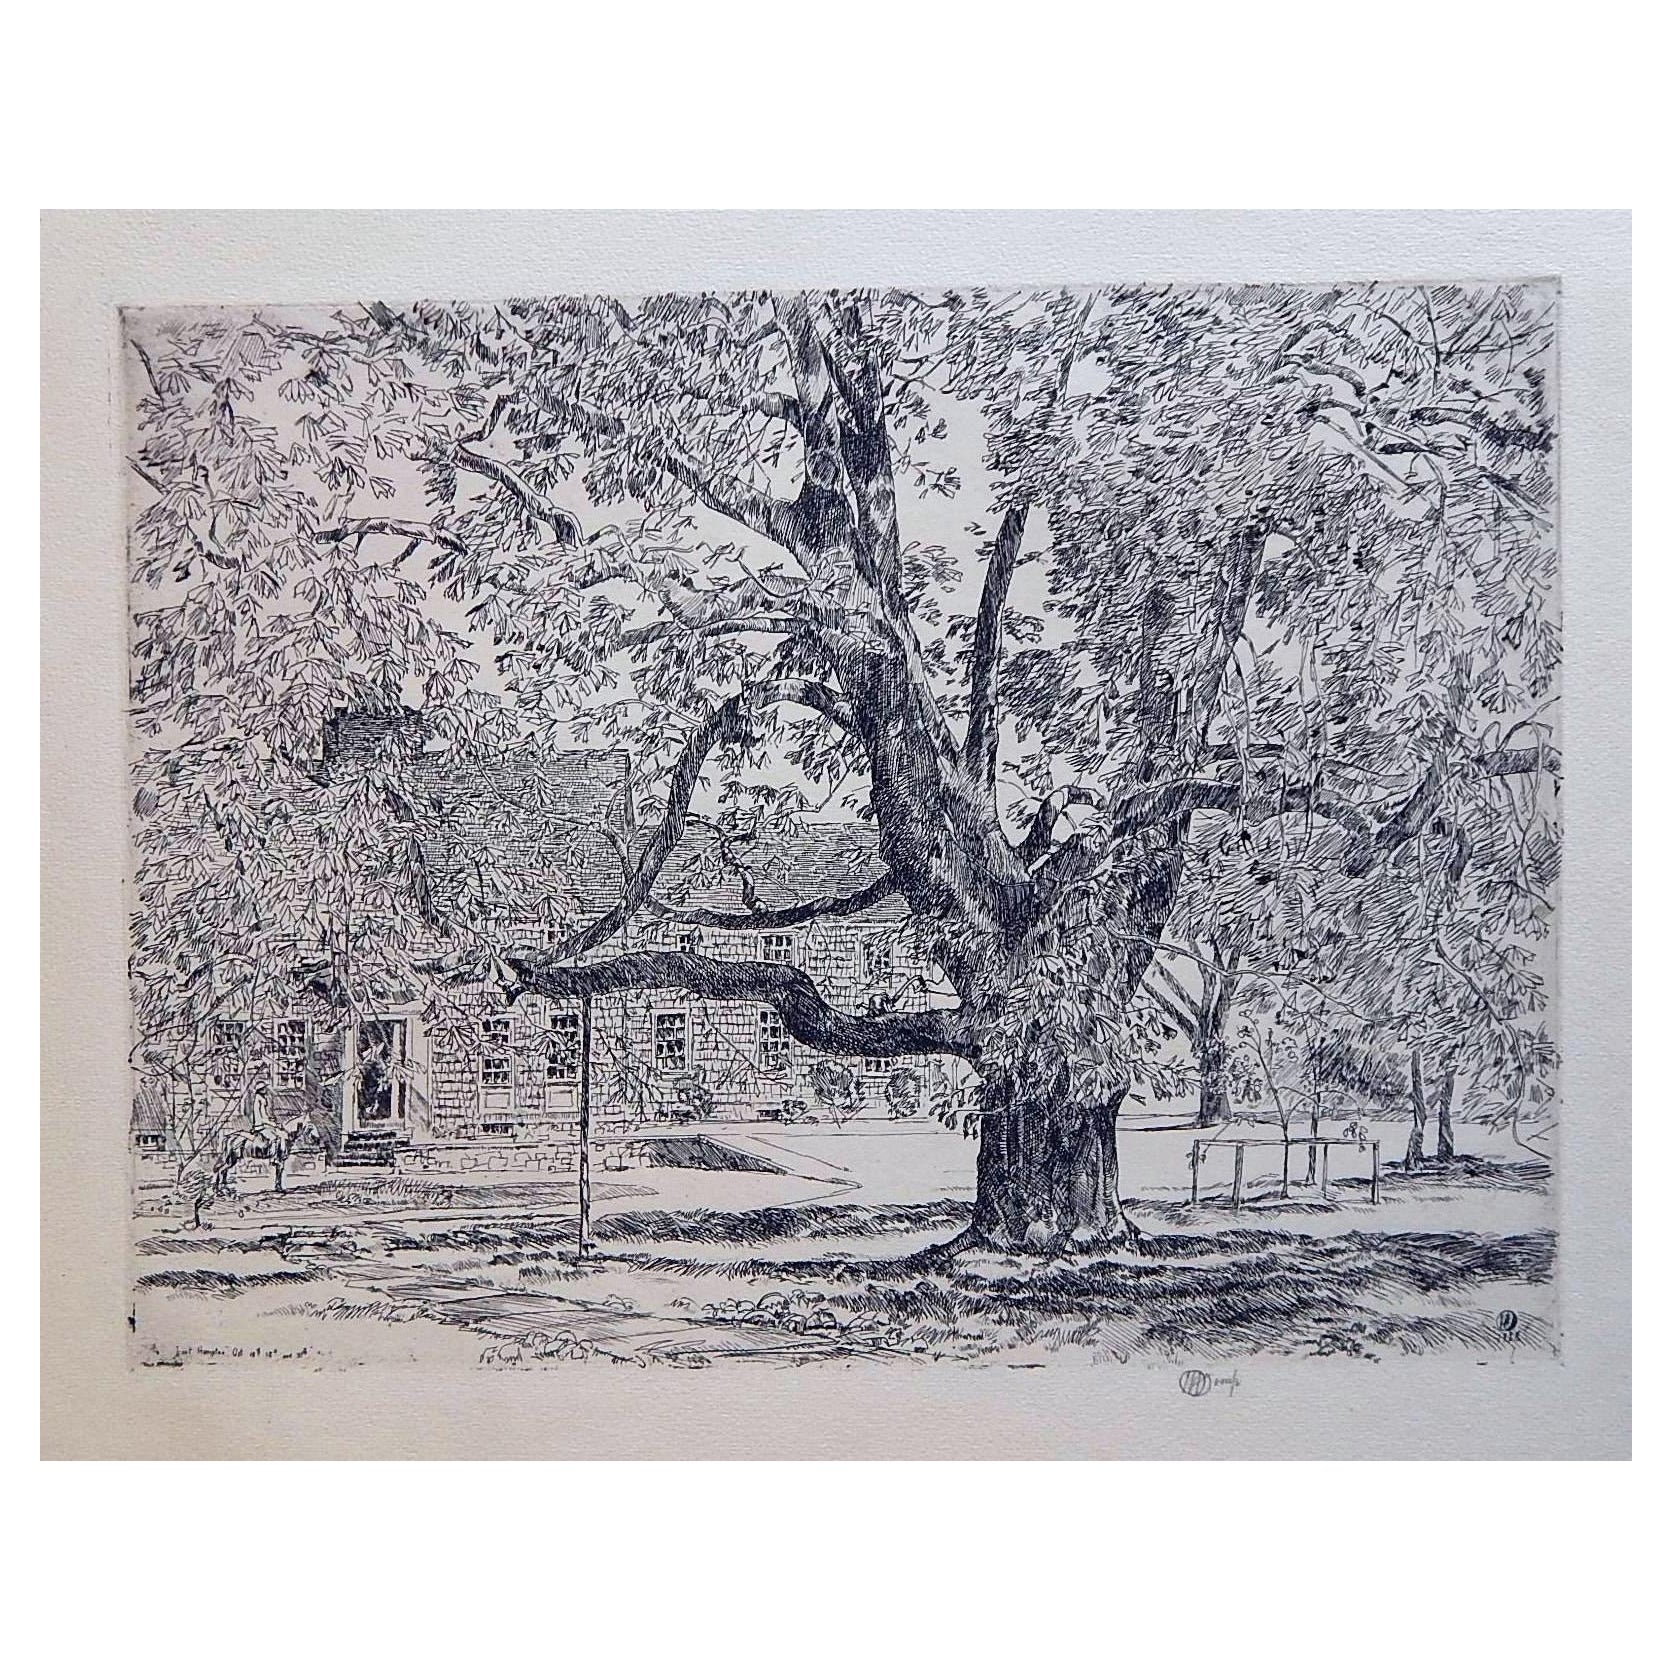 Childe Hassam Original Etching, 1928, “The Big Horse Chestnut Tree”